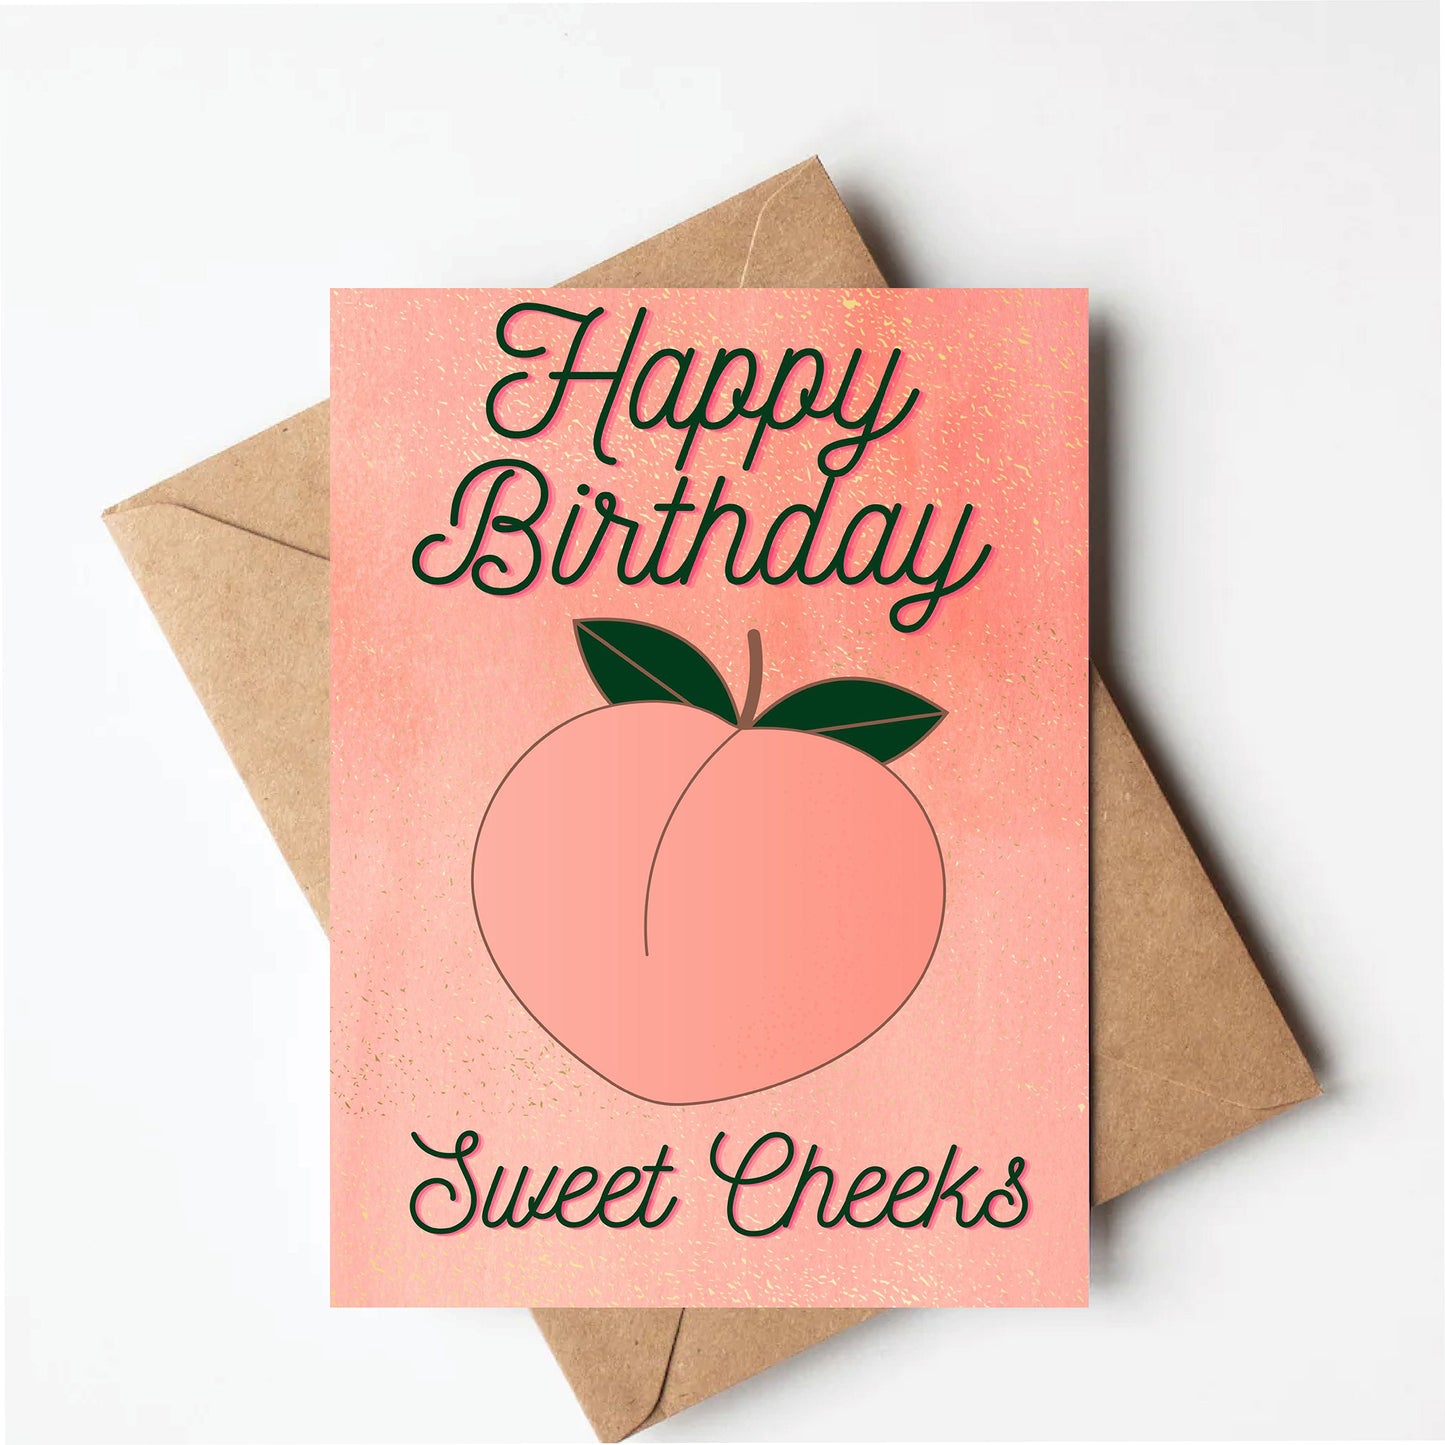 Sweet cheeks birthday card